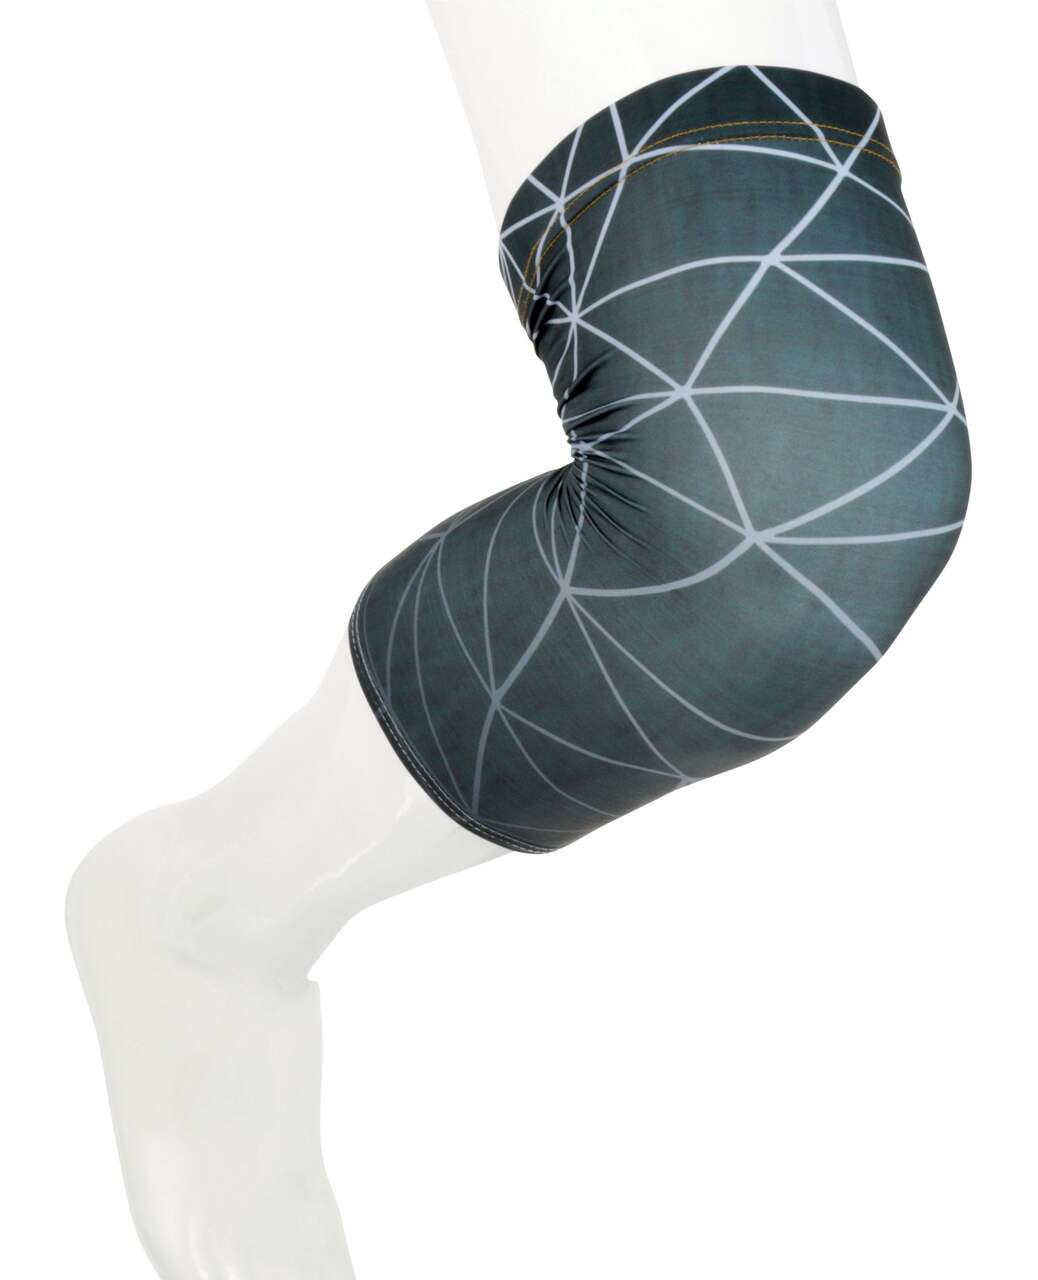 Tensor™ Sport Compression Knee Sleeve